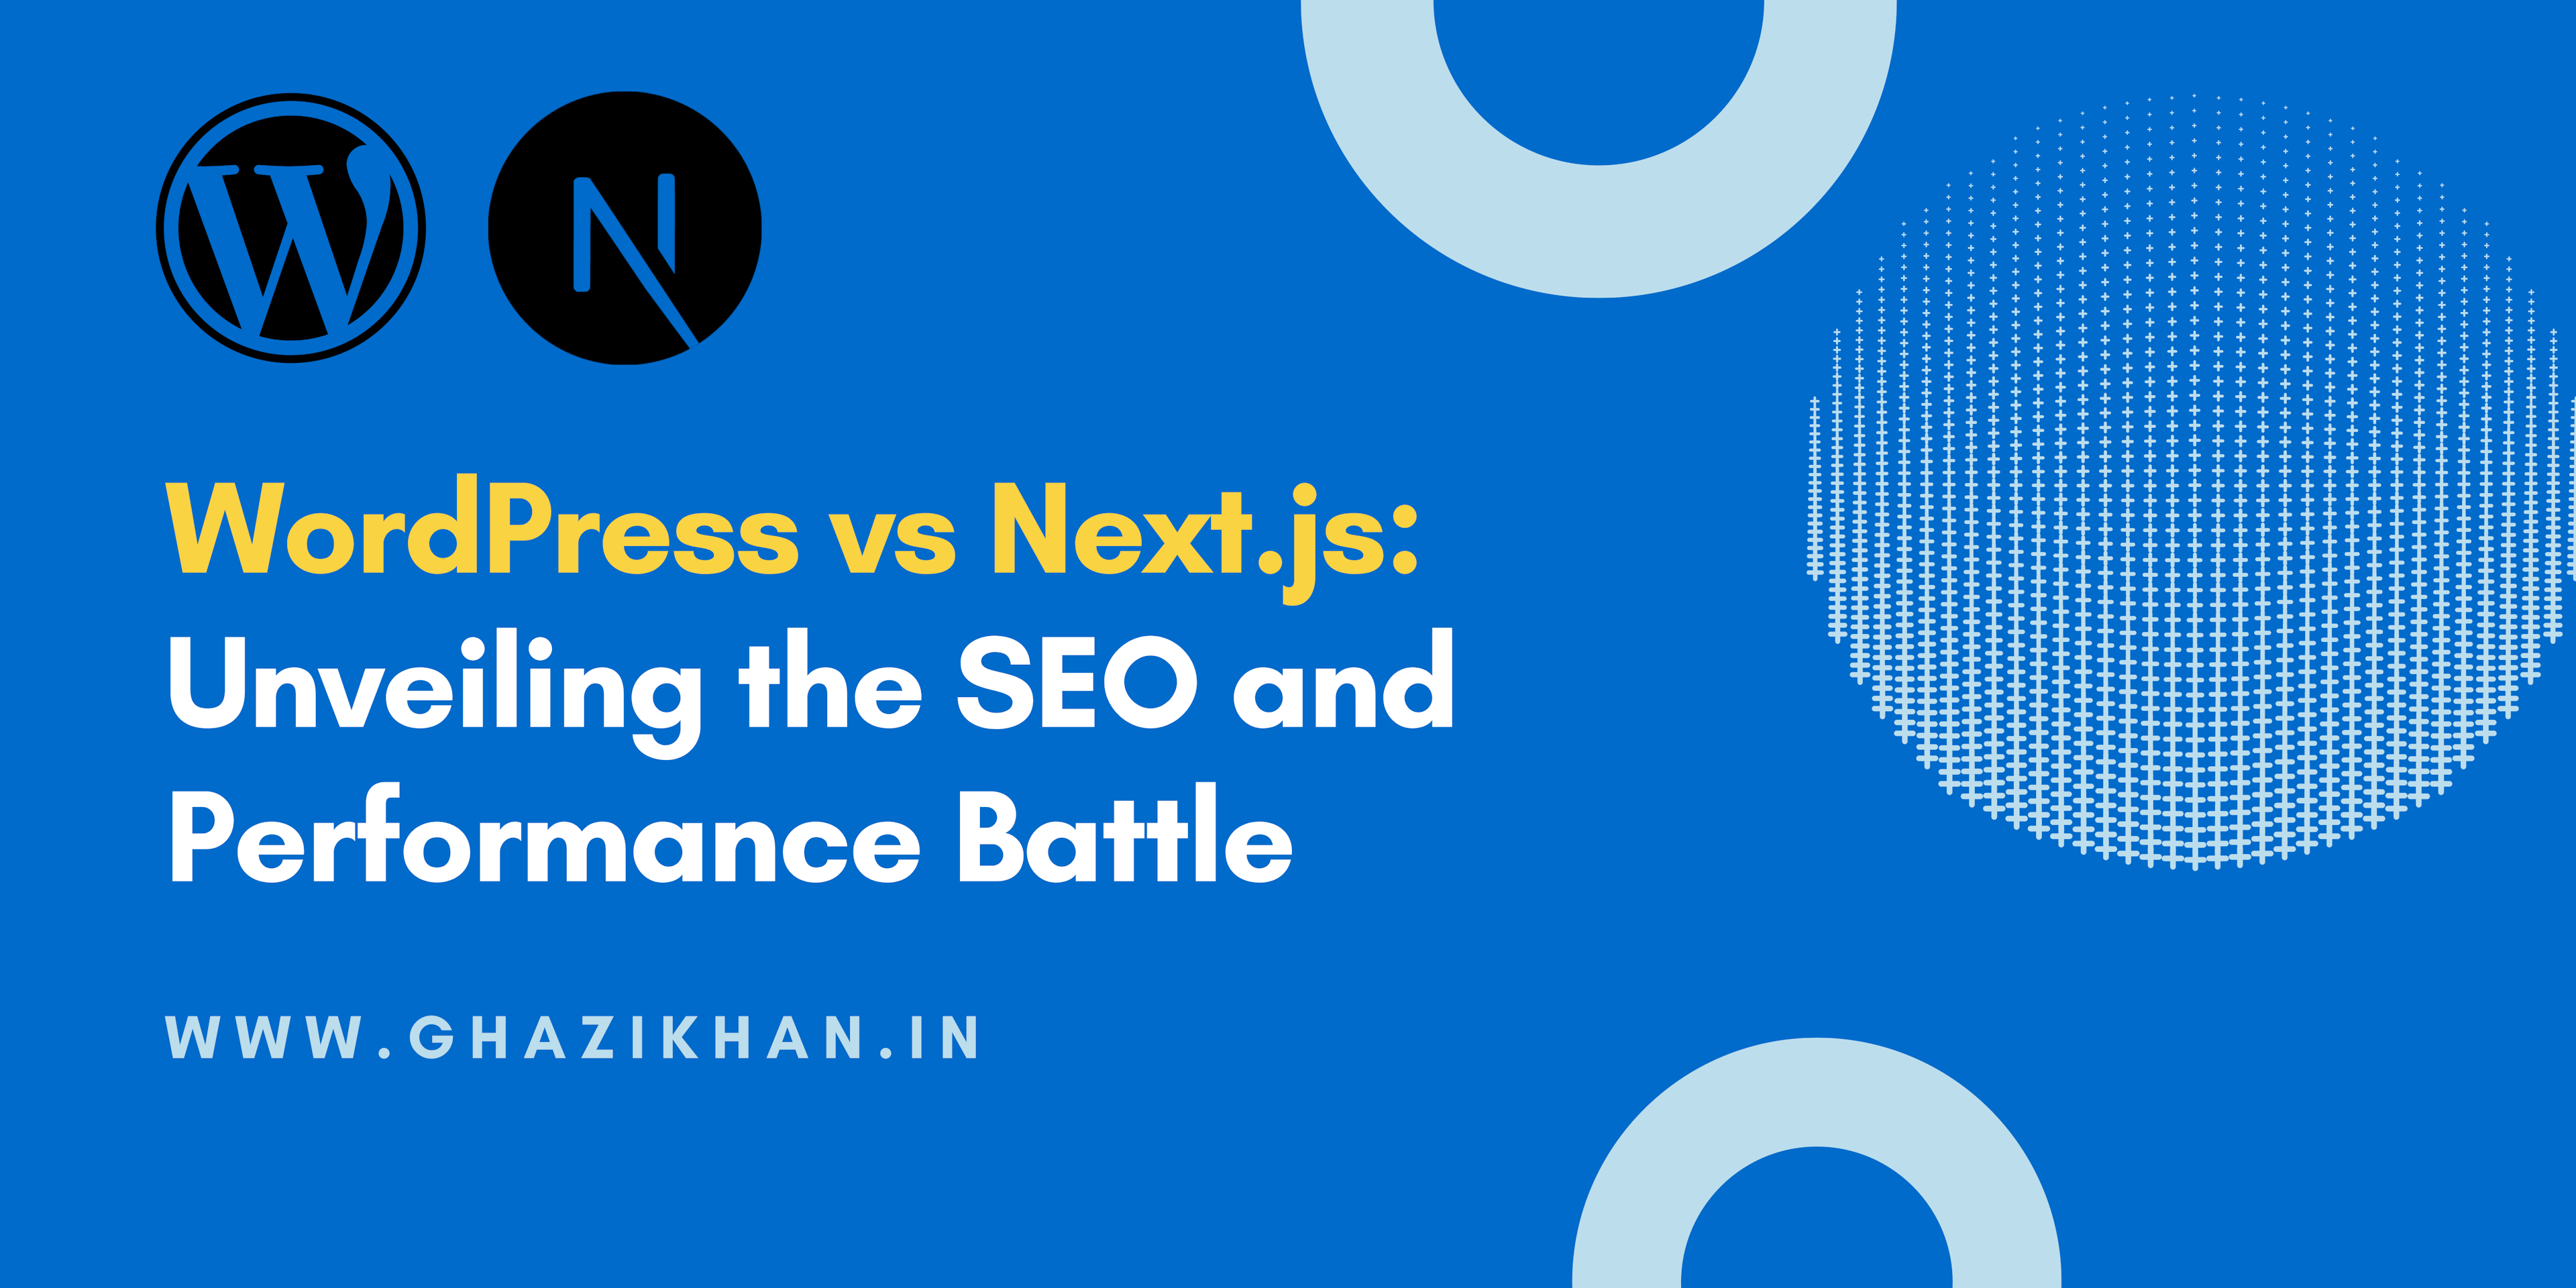 WordPress vs Next.js: Unveiling the SEO and Performance Battle